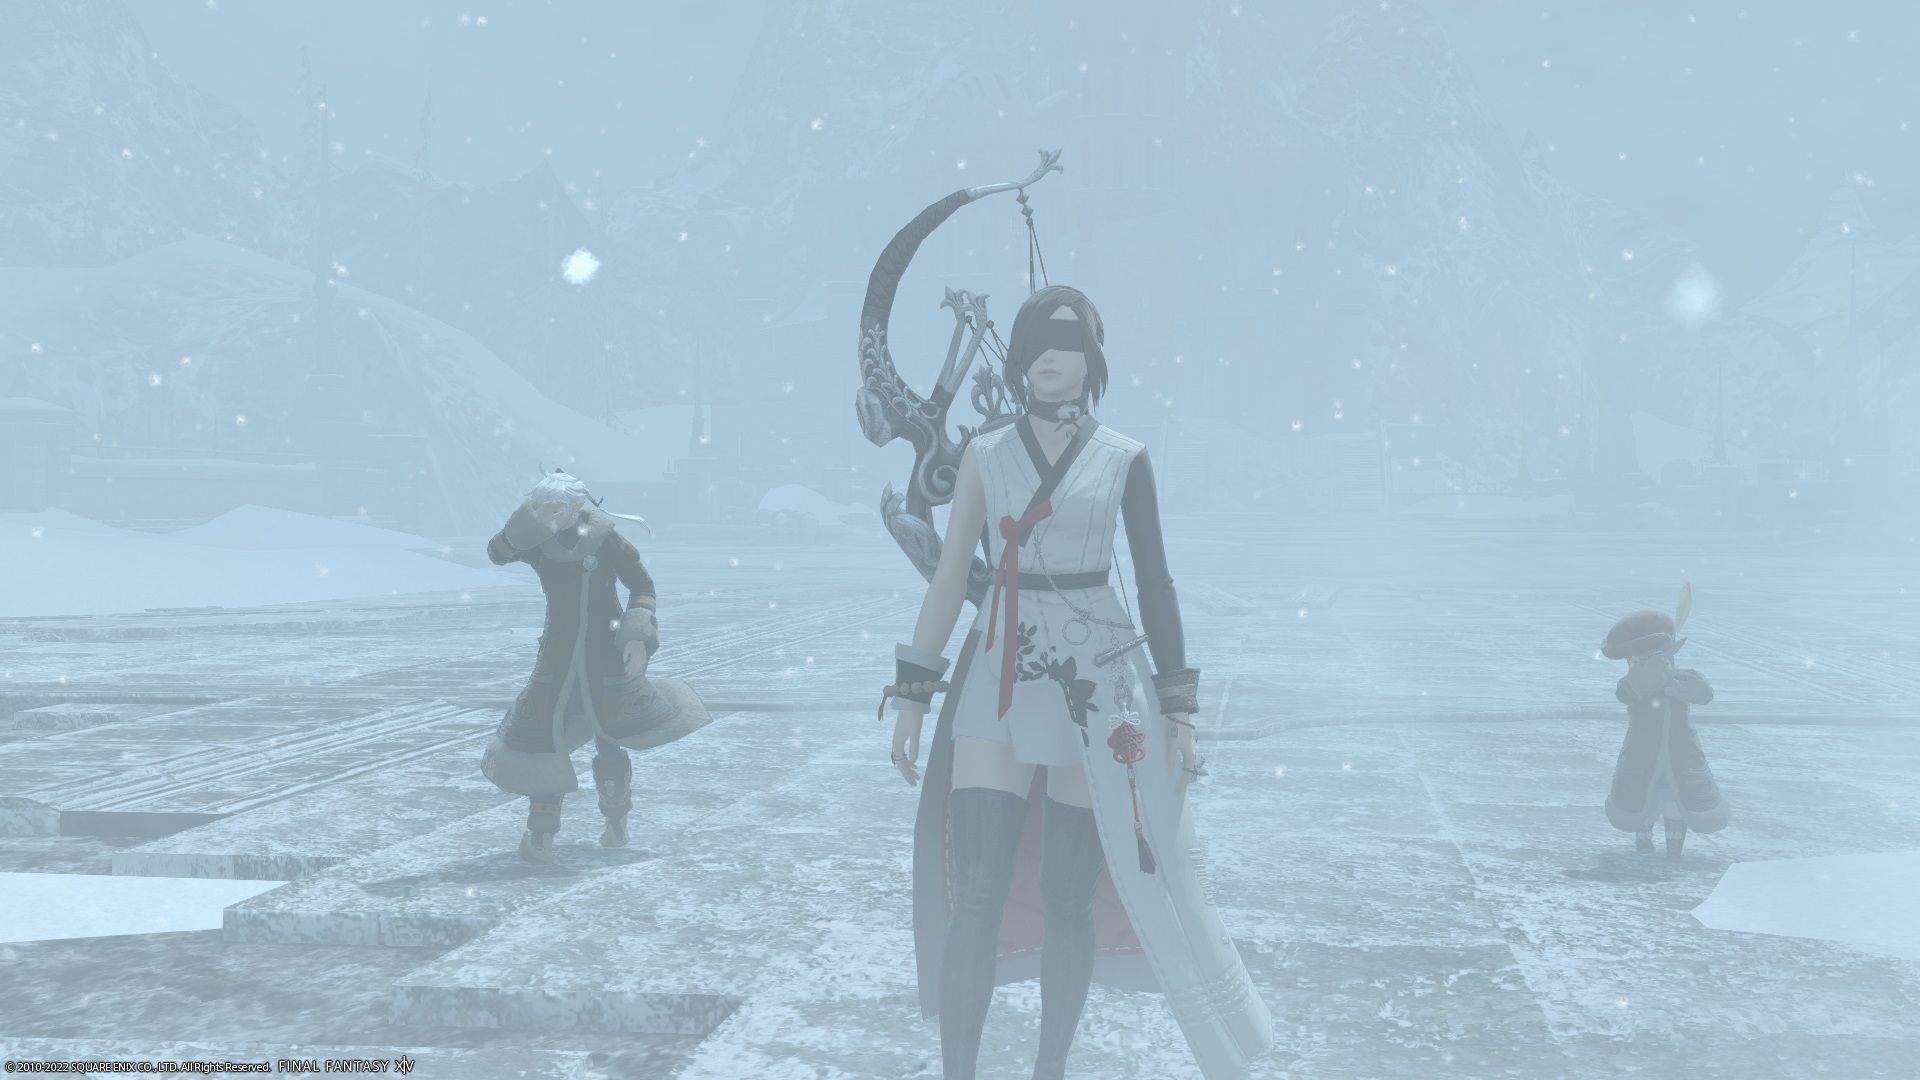 Final Fantasy 14 Warrior of Light, Tataru, and Alphinaud walking to Ishgard